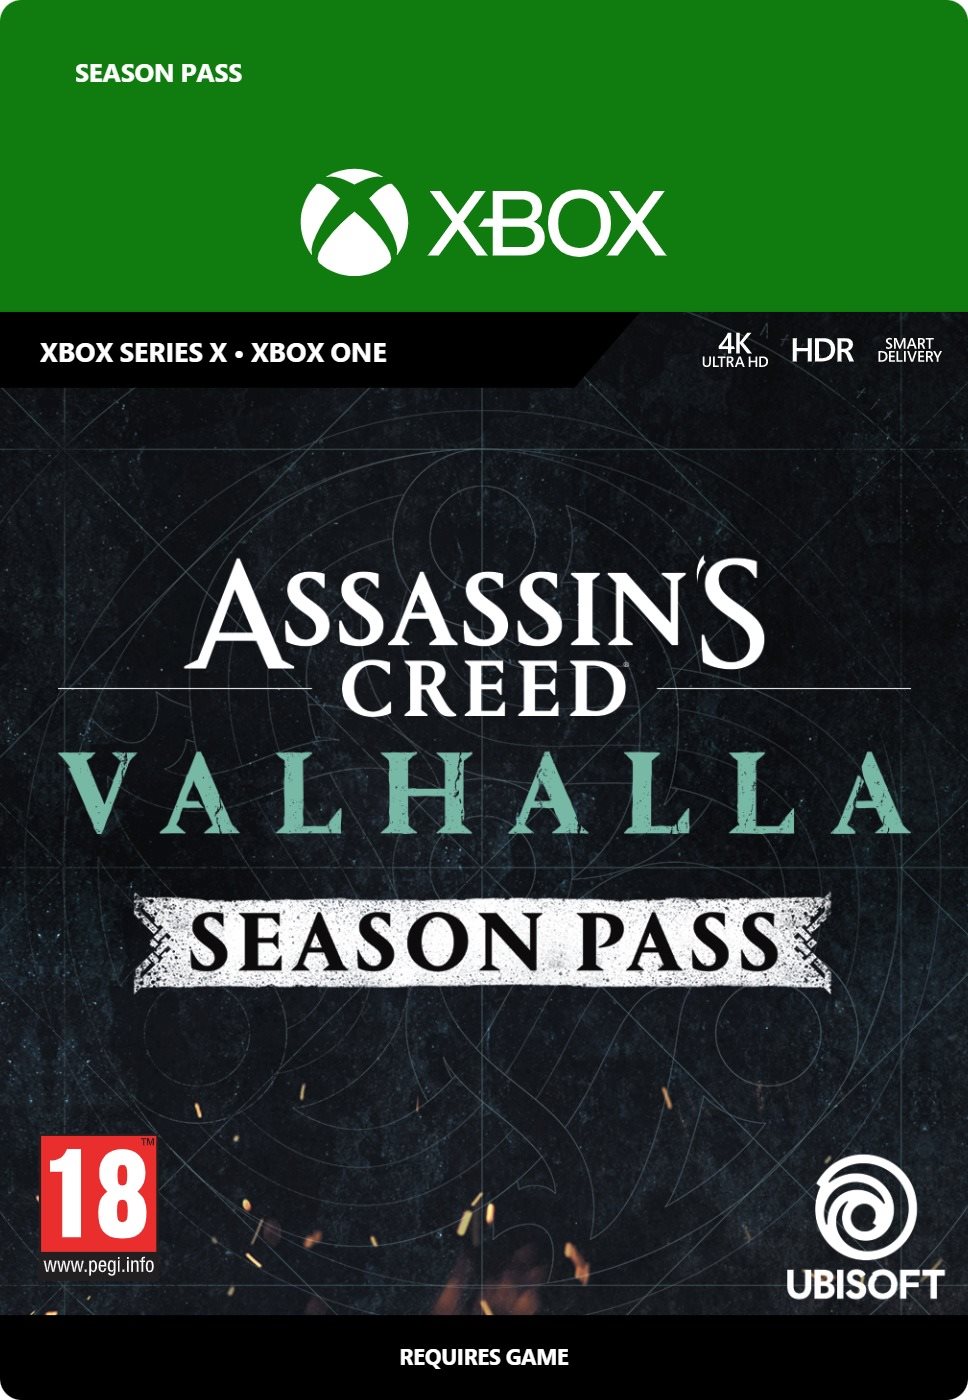 Assassins Creed Valhalla Season Pass - Xbox One Digital